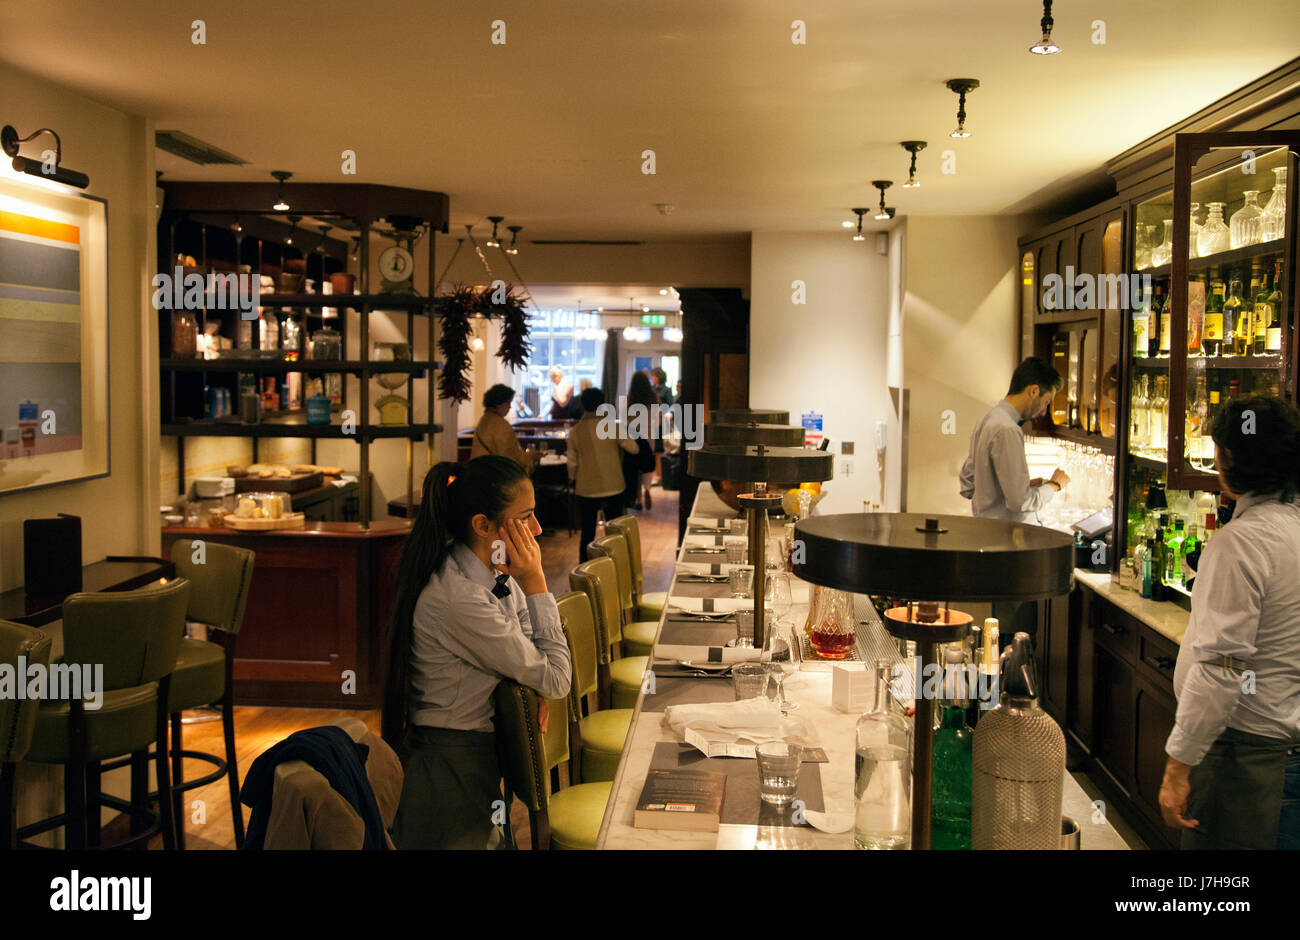 Cafe Murano in Covent Garden - London UK Stock Photo - Alamy